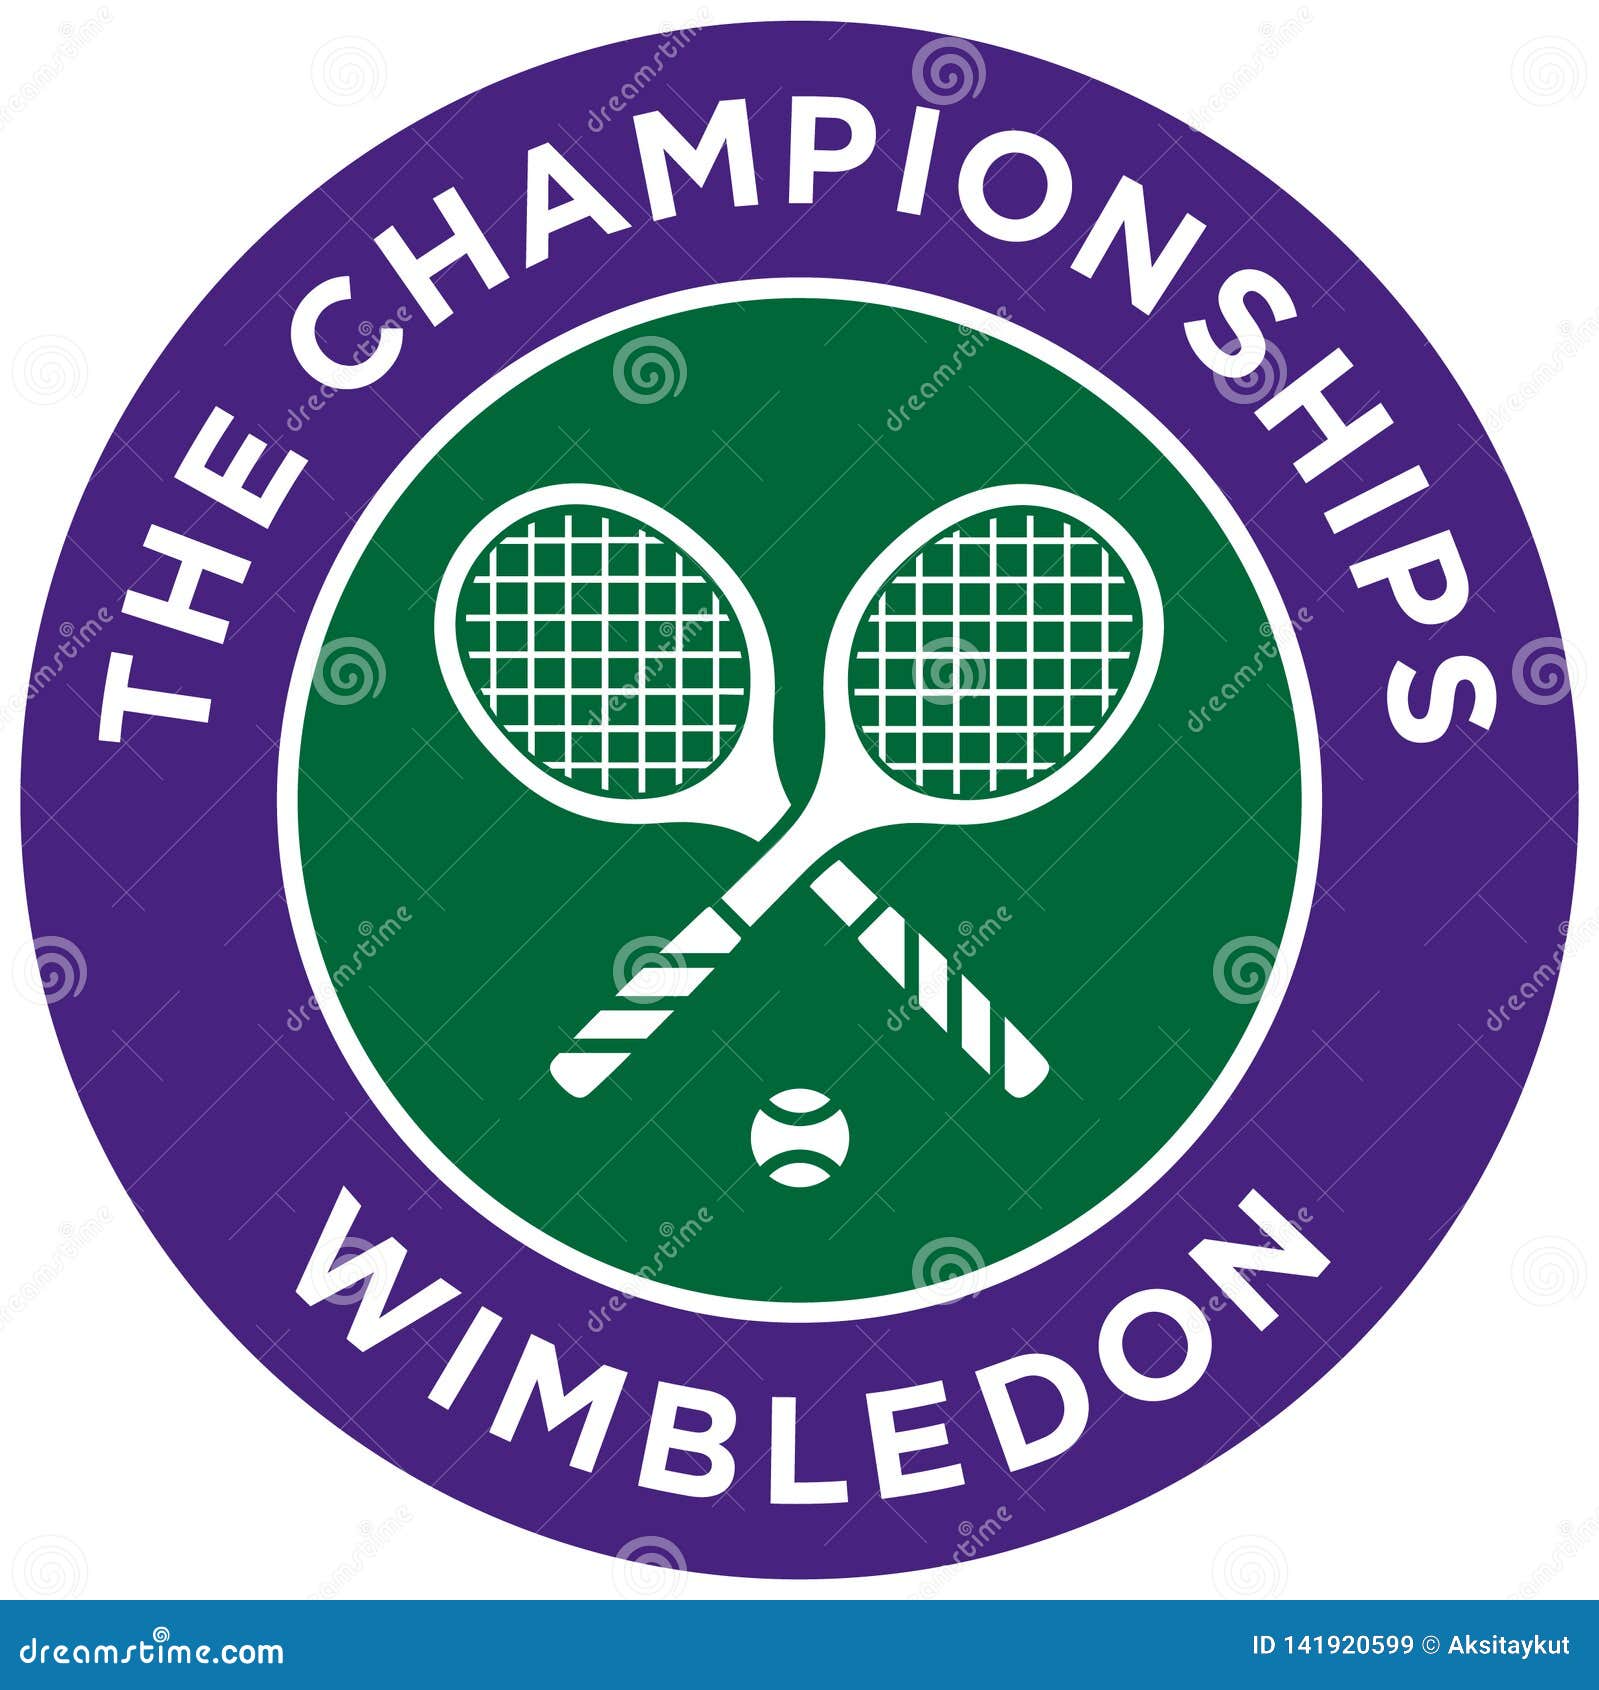 Wimbledon icon editorial stock image. Illustration of london - 141920599